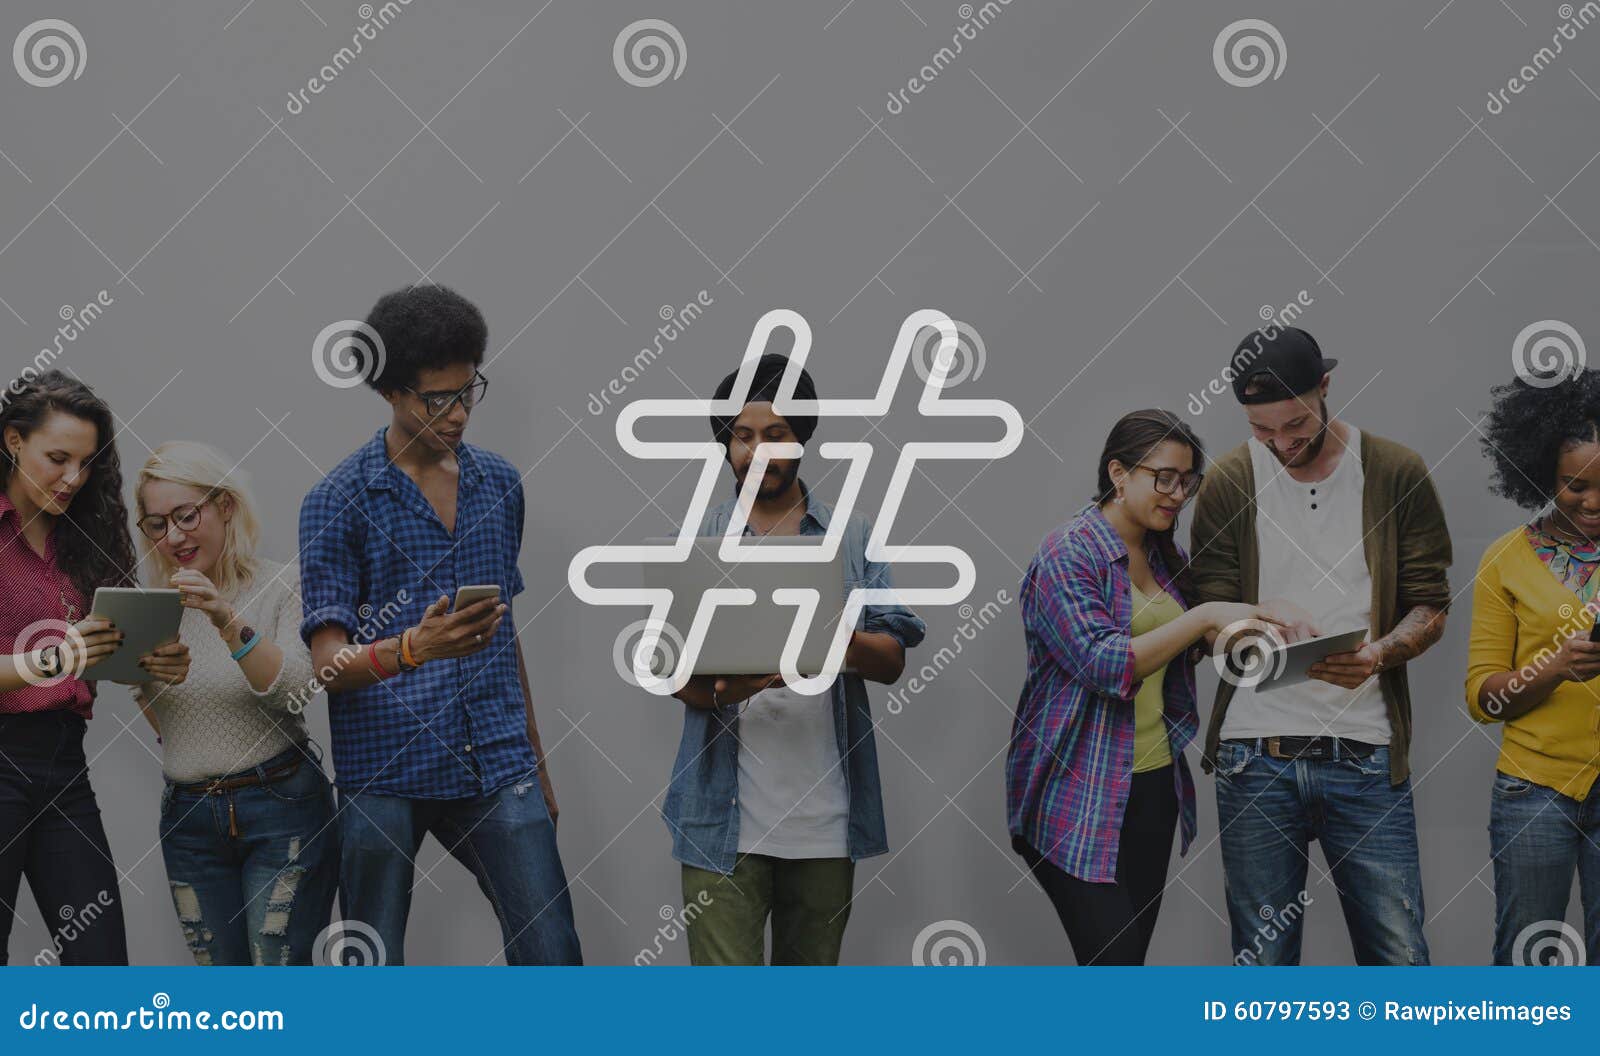 hashtag icon social media blog post concept